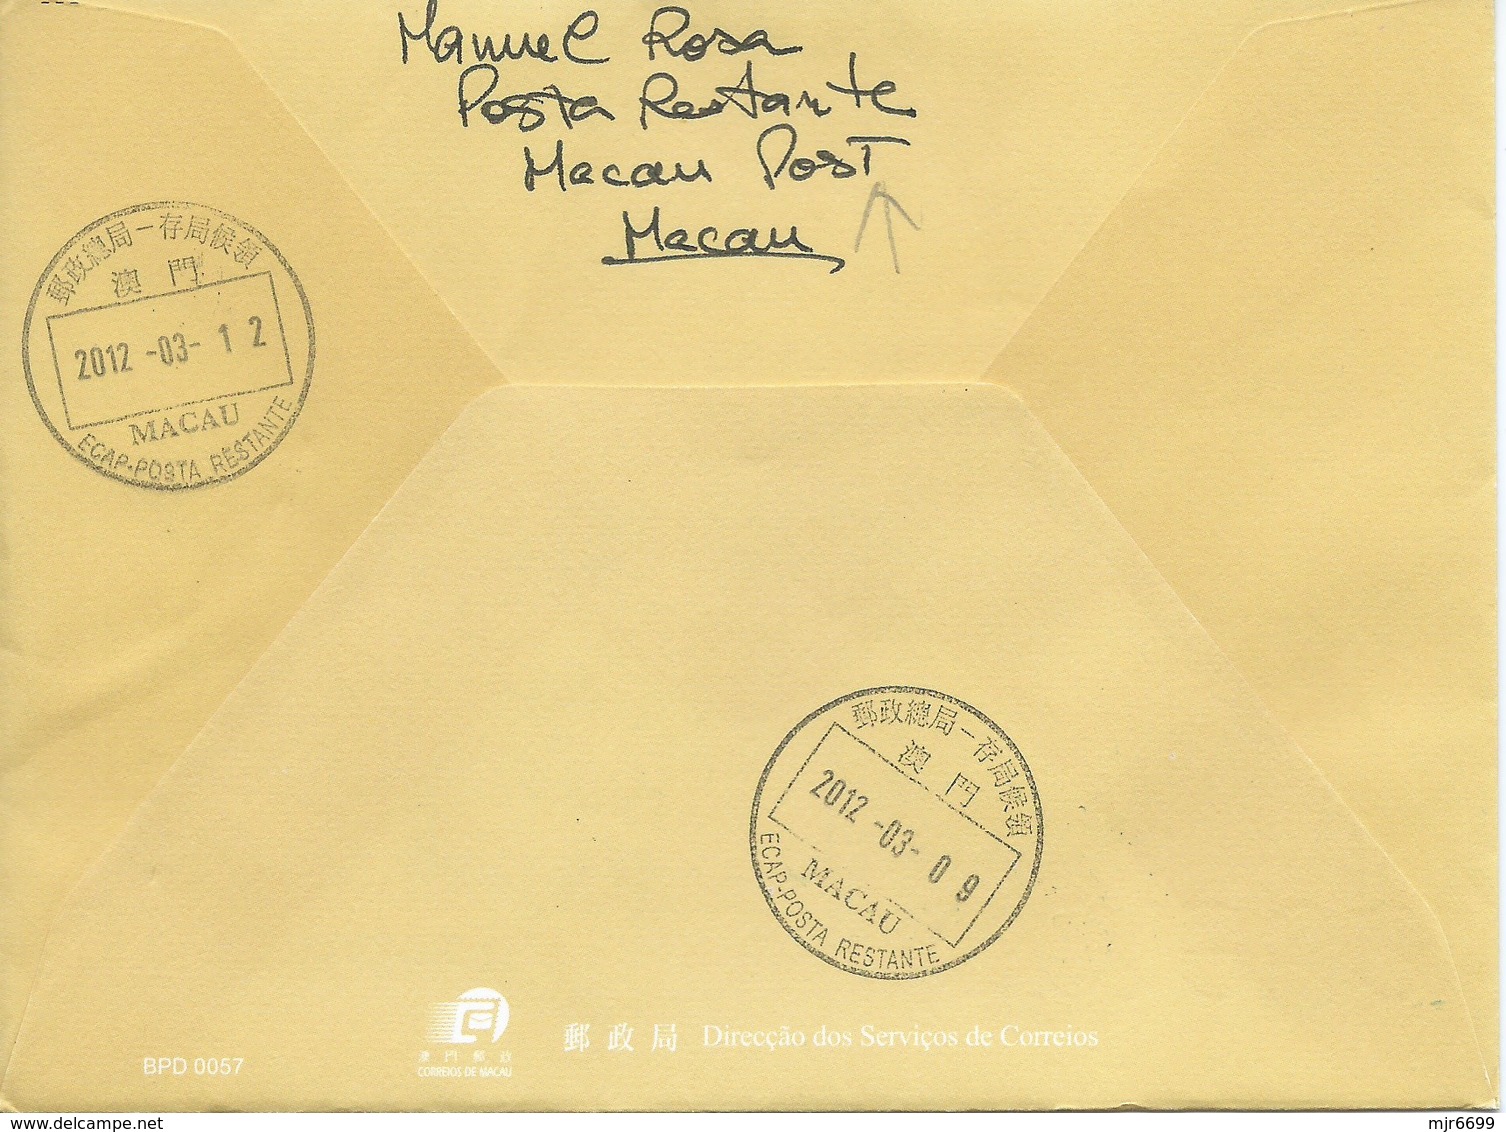 MACAU 2012 LUNAR YEAR OF THE DRAGON GREETING CARD & POSTAGE PAID COVER - Postal Stationery